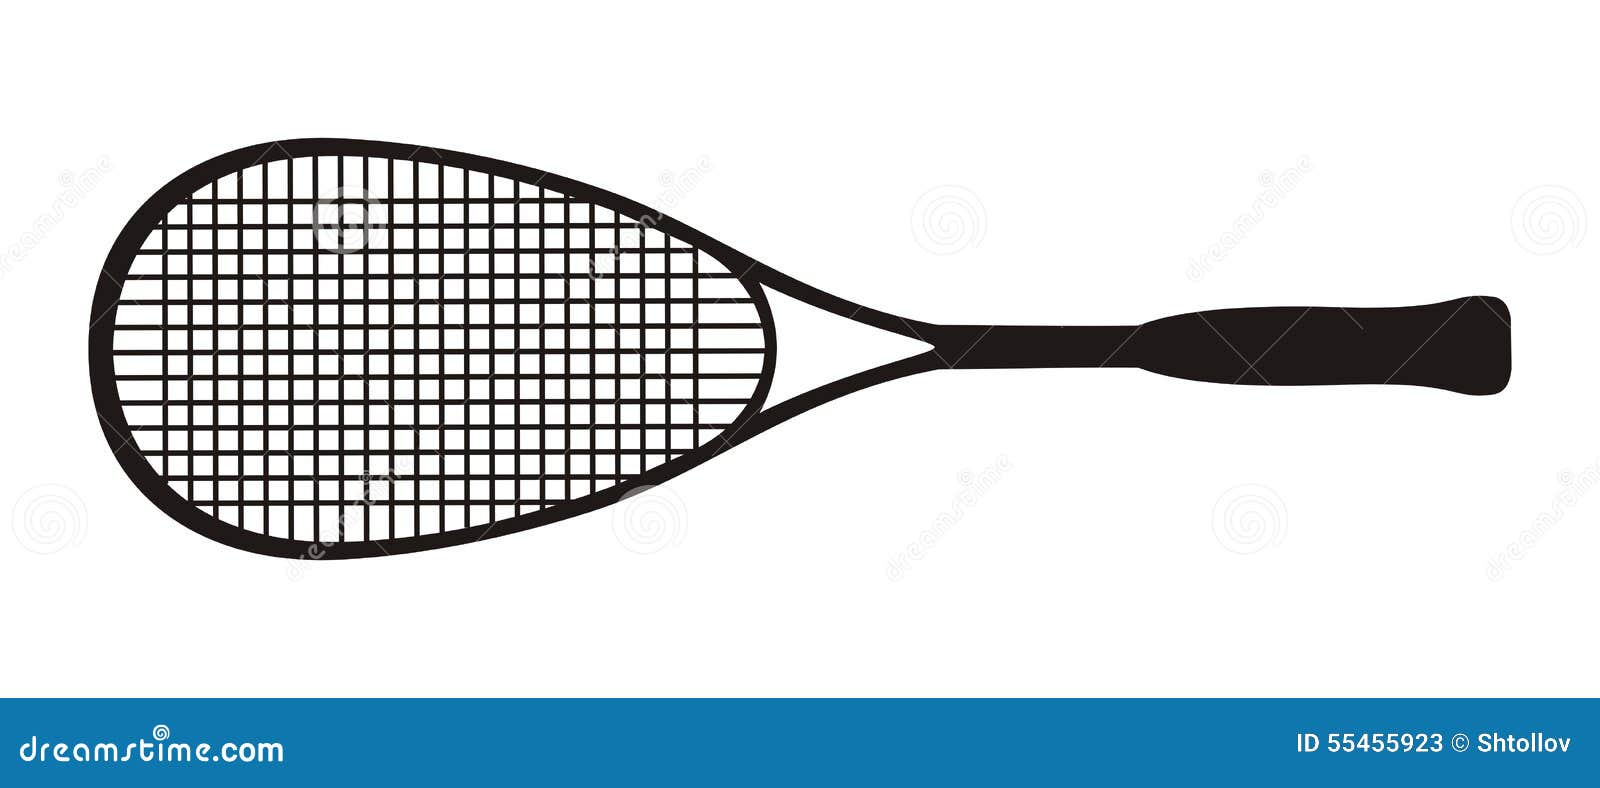 black squash racket on a white background